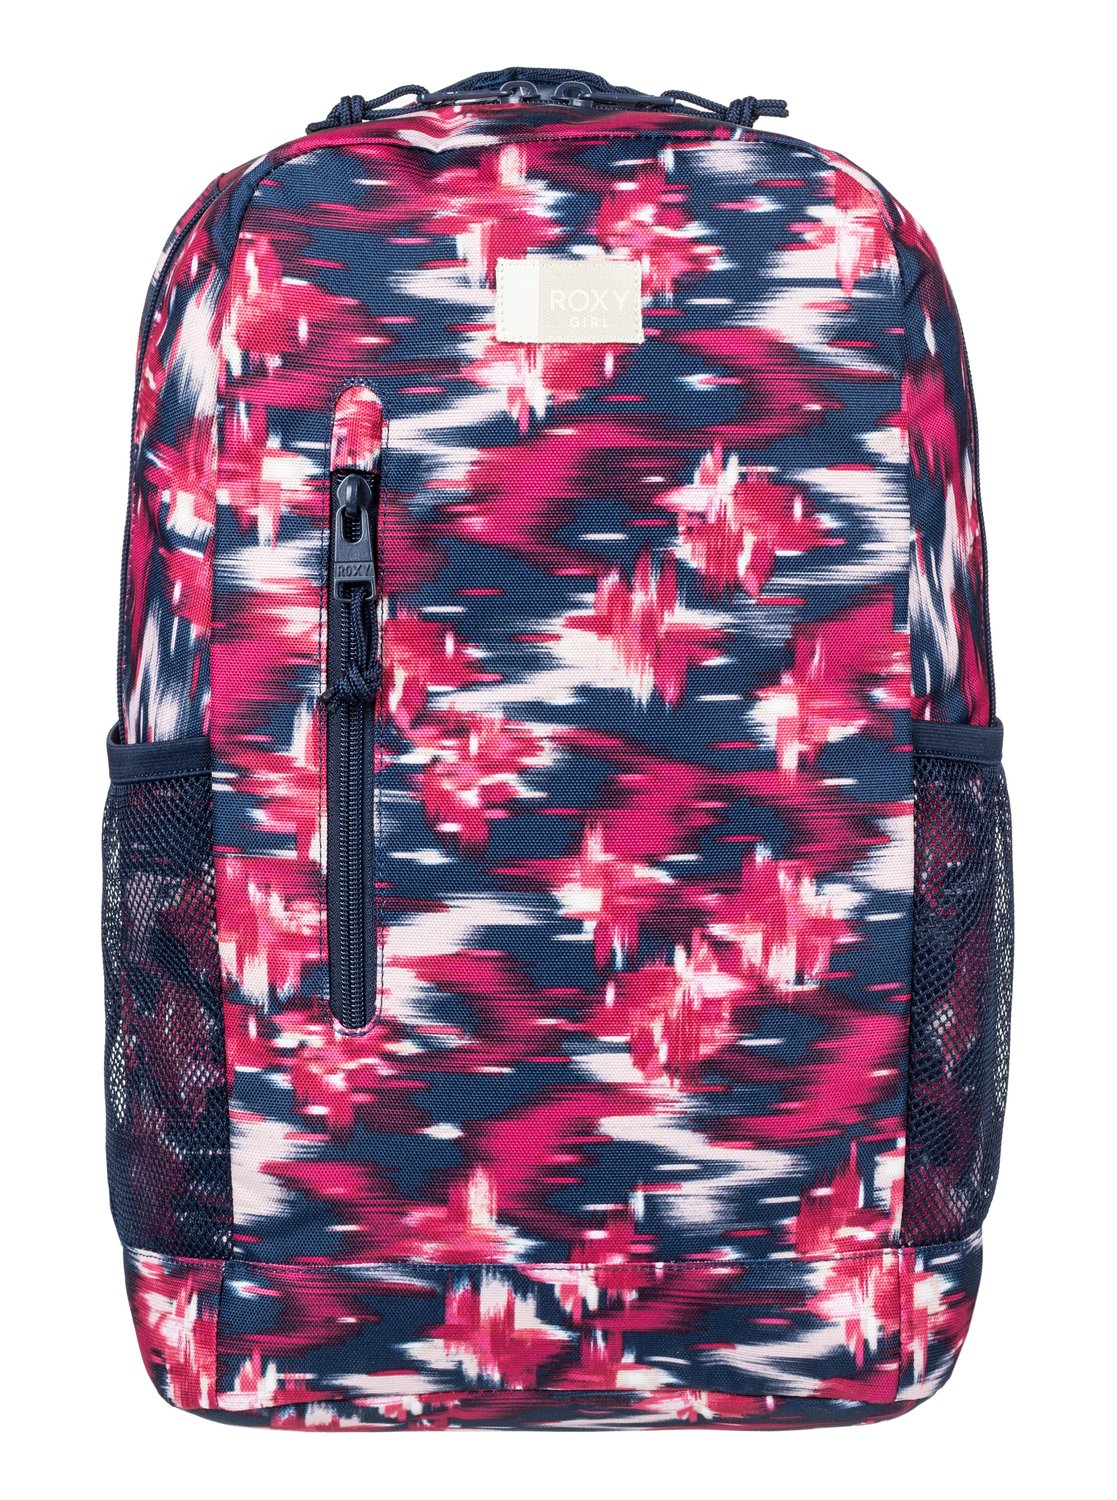 Roxy™ Travelling Birds - Backpack - Girls 8-16 - ONE SIZE - Pink | eBay